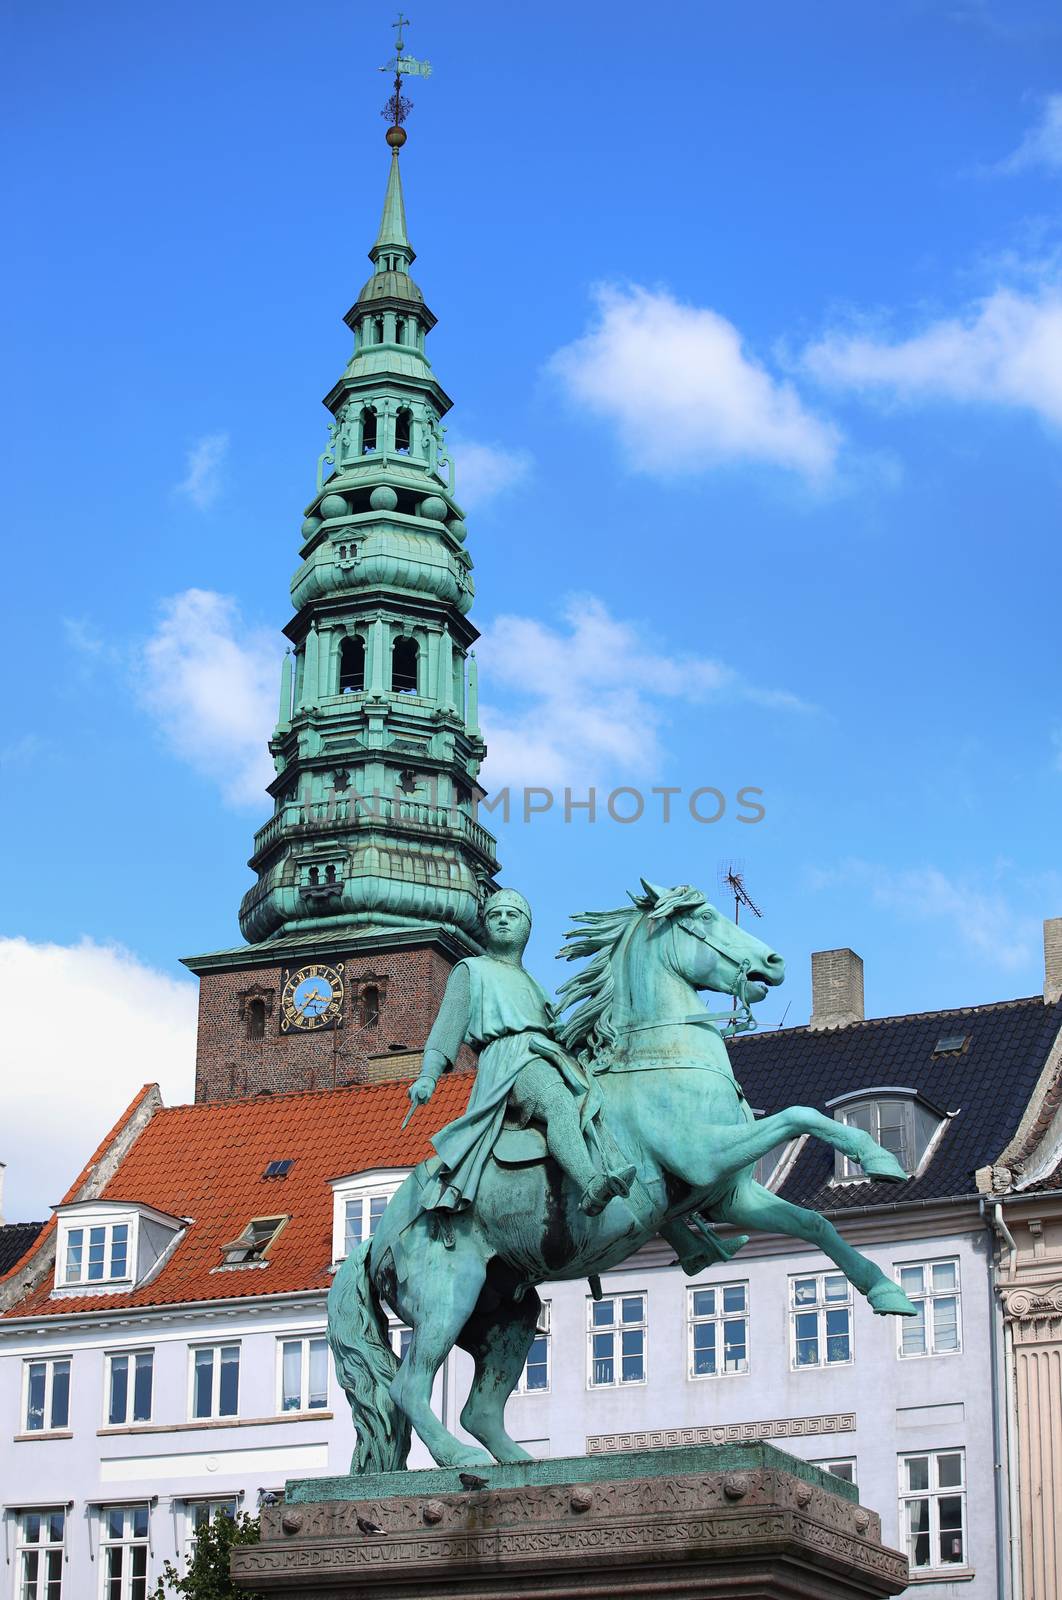 Hojbro Plads Square with the equestrian statue of Bishop Absalon and St Kunsthallen Nikolaj church in Copenhagen, Denmark